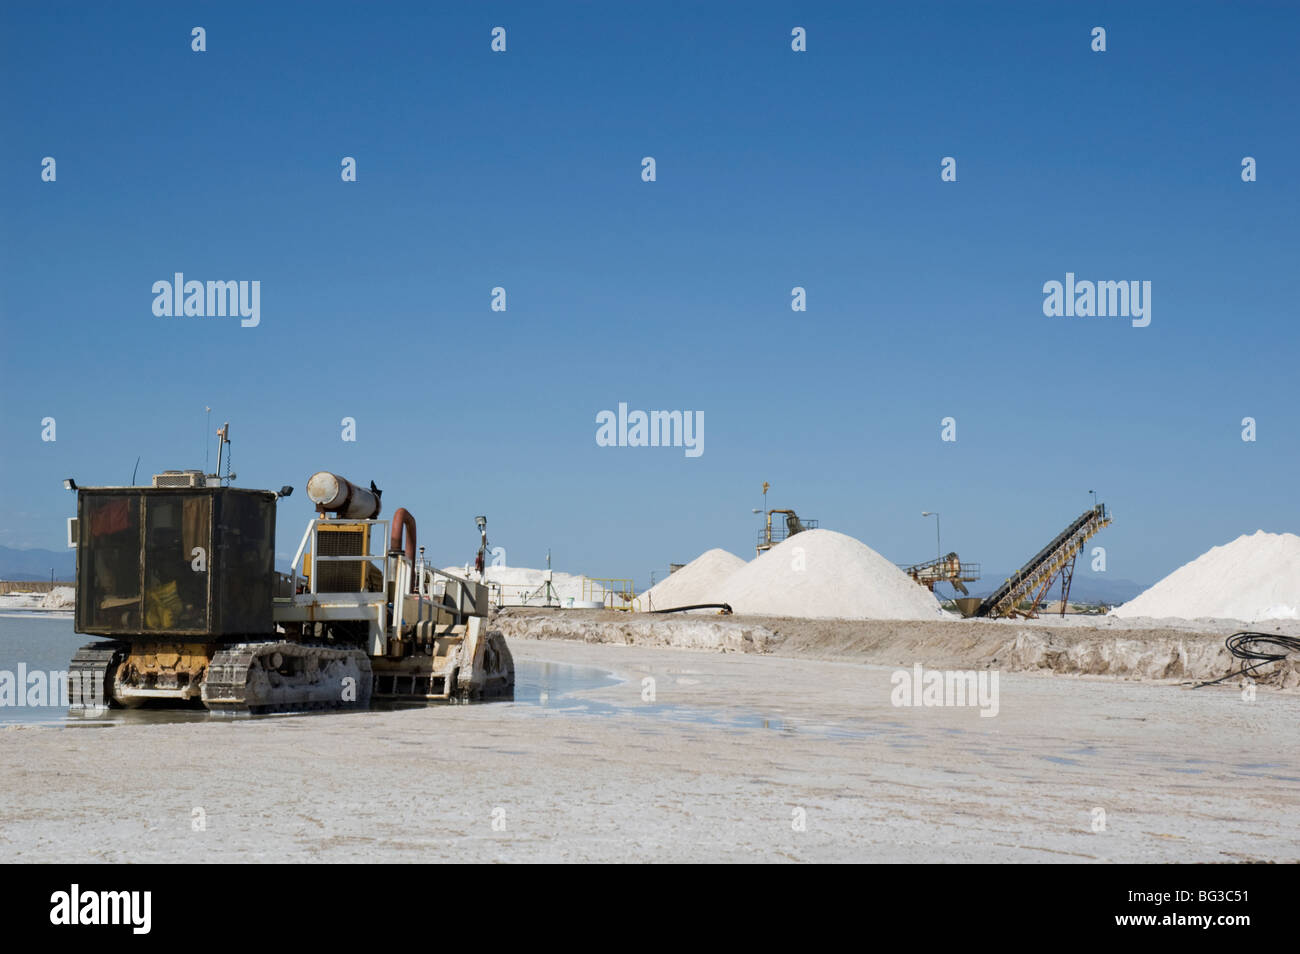 A Morton salt production facility that uses the Solar evaporation method, Glendale, Arizona, USA Stock Photo